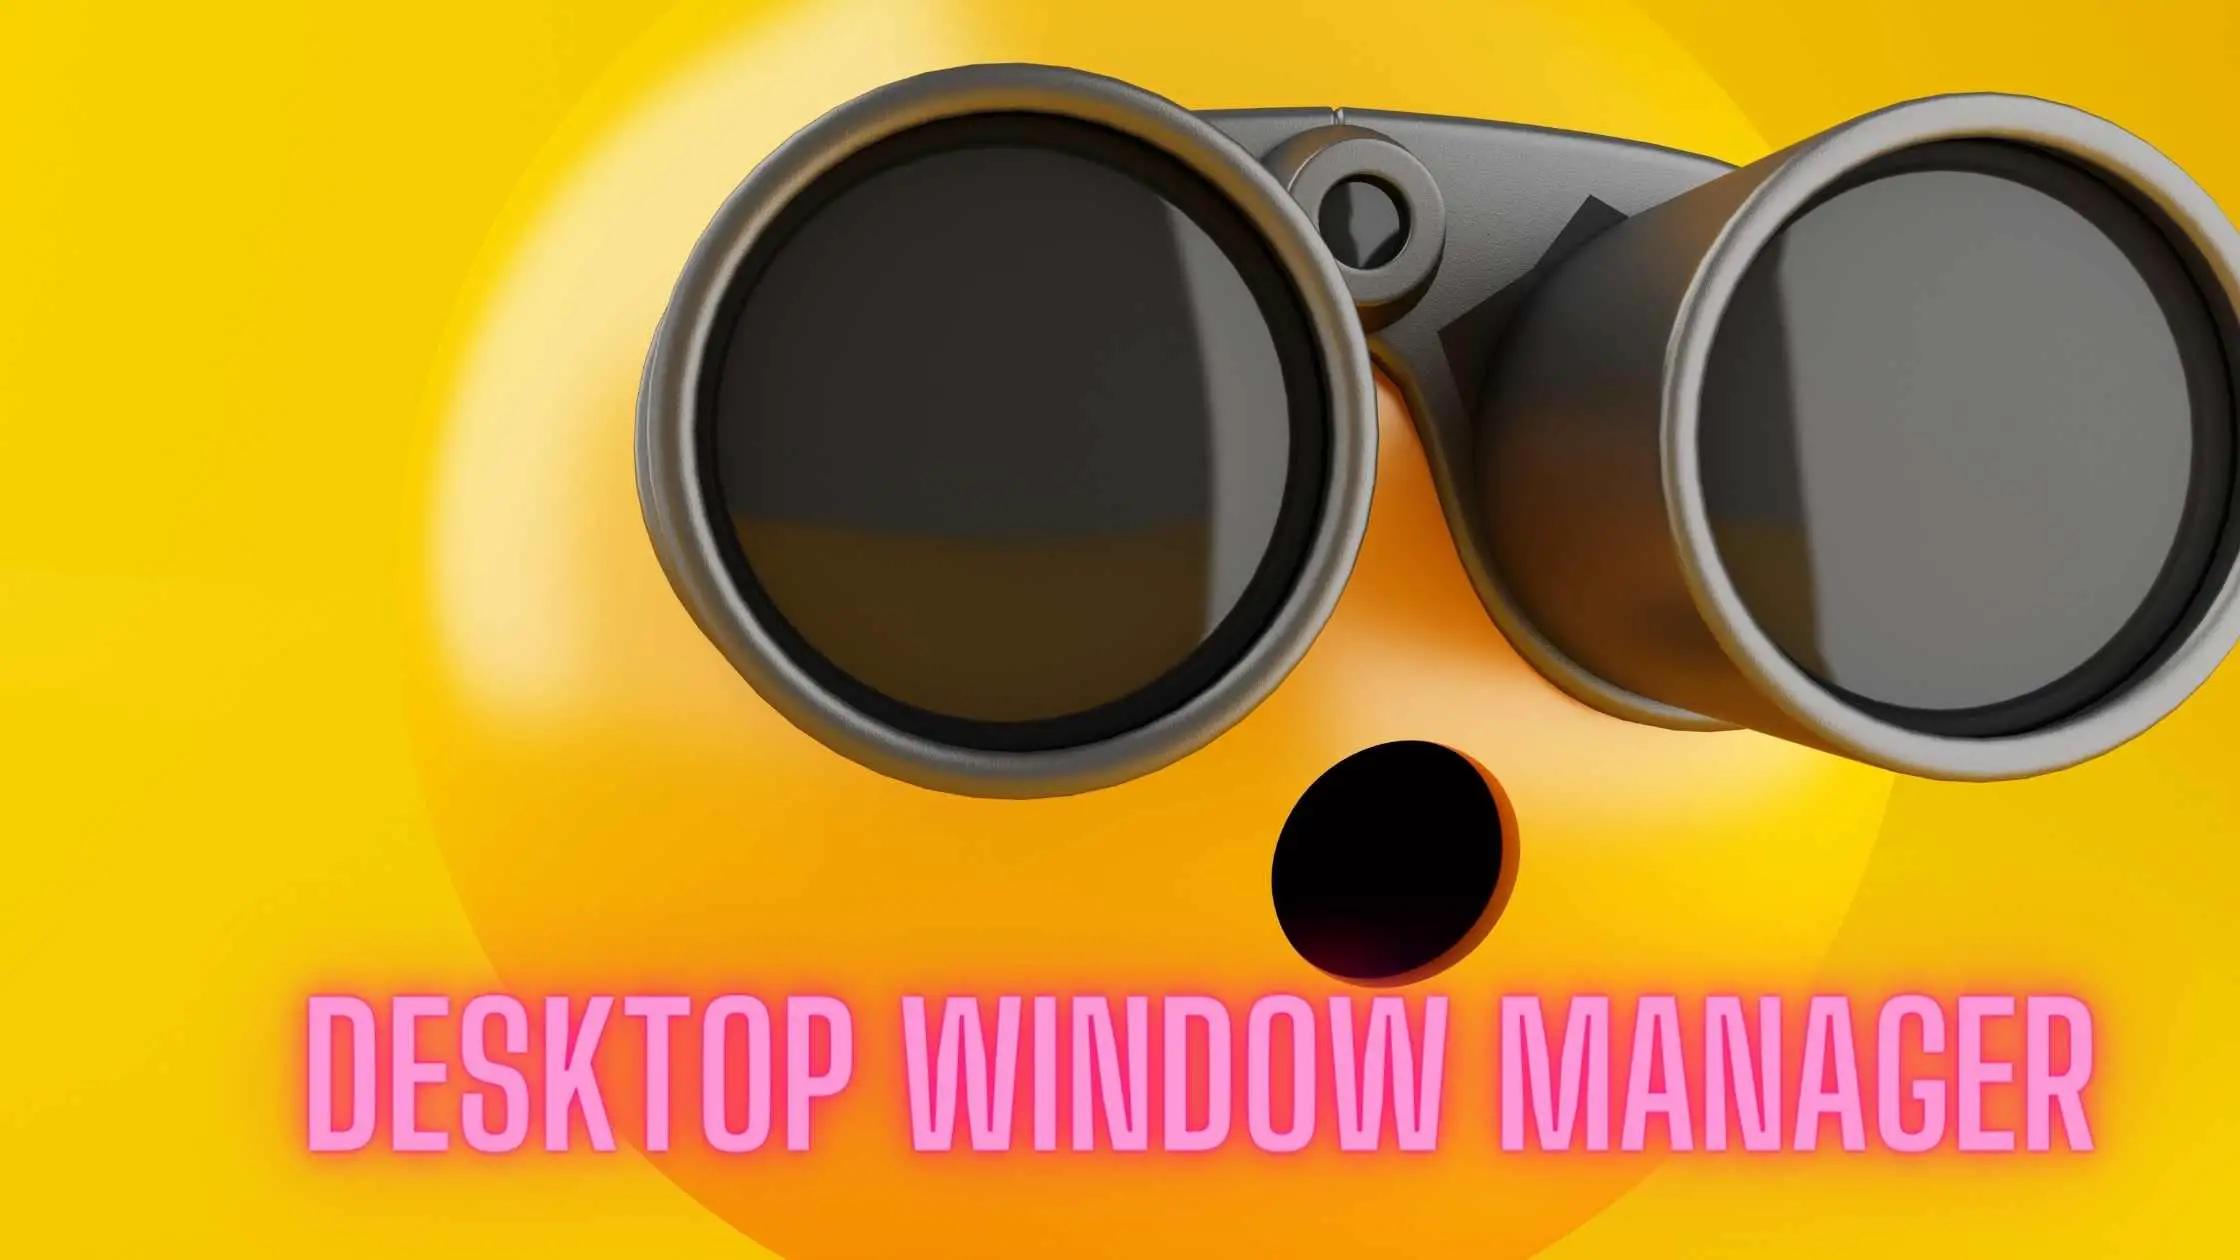 desktop window manager